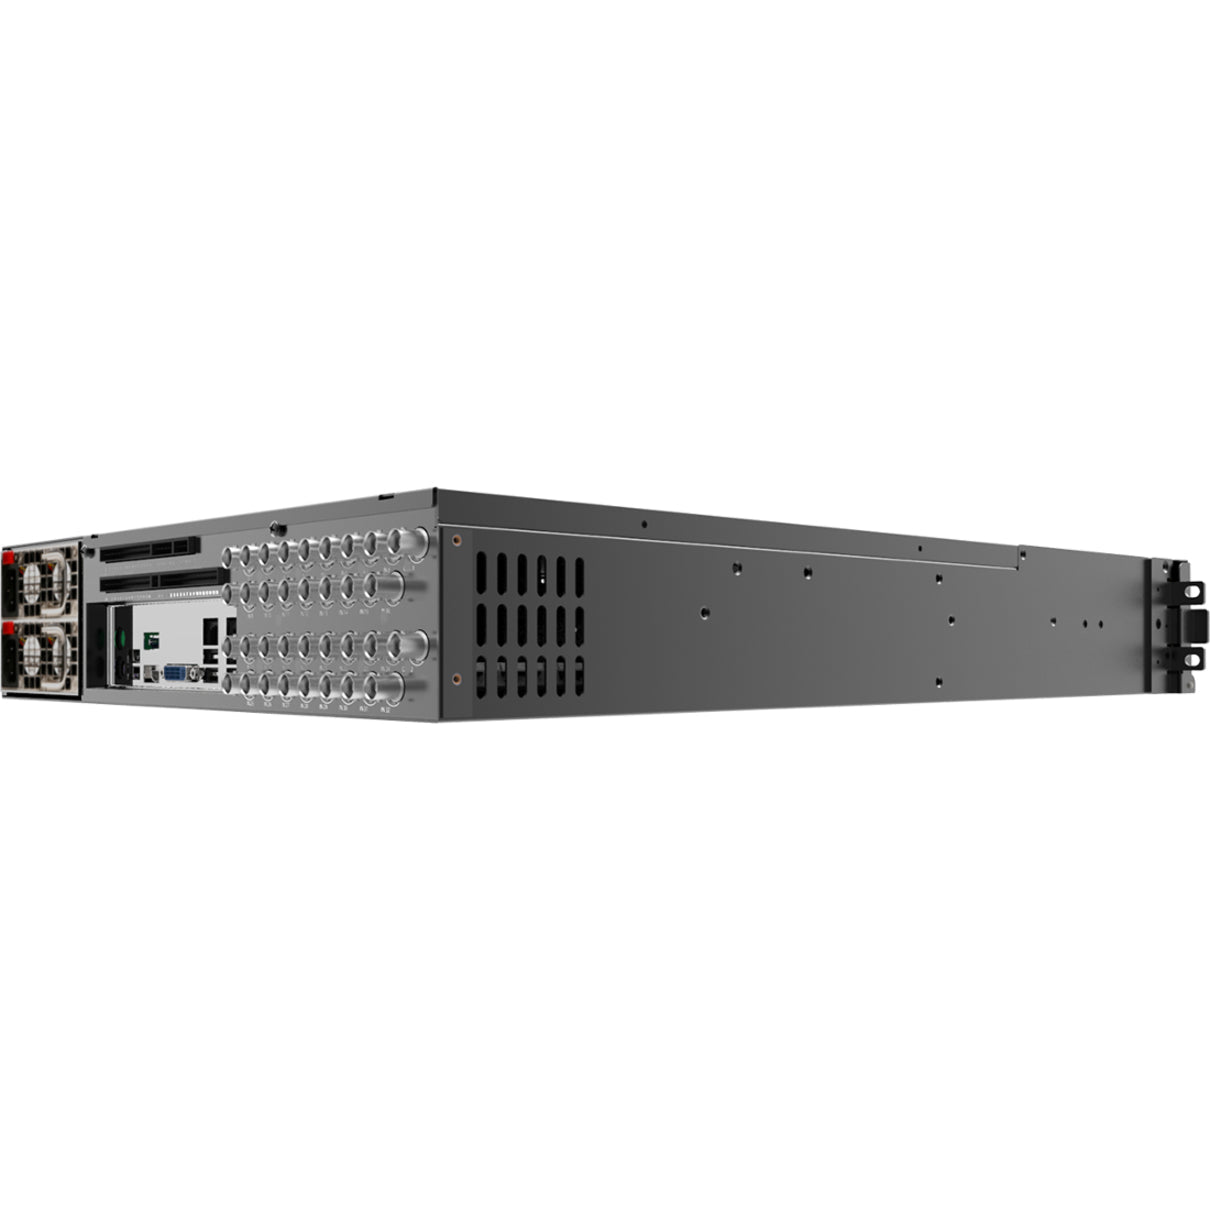 Exacq exacqVision Z Network Surveillance Server - 8 TB HDD